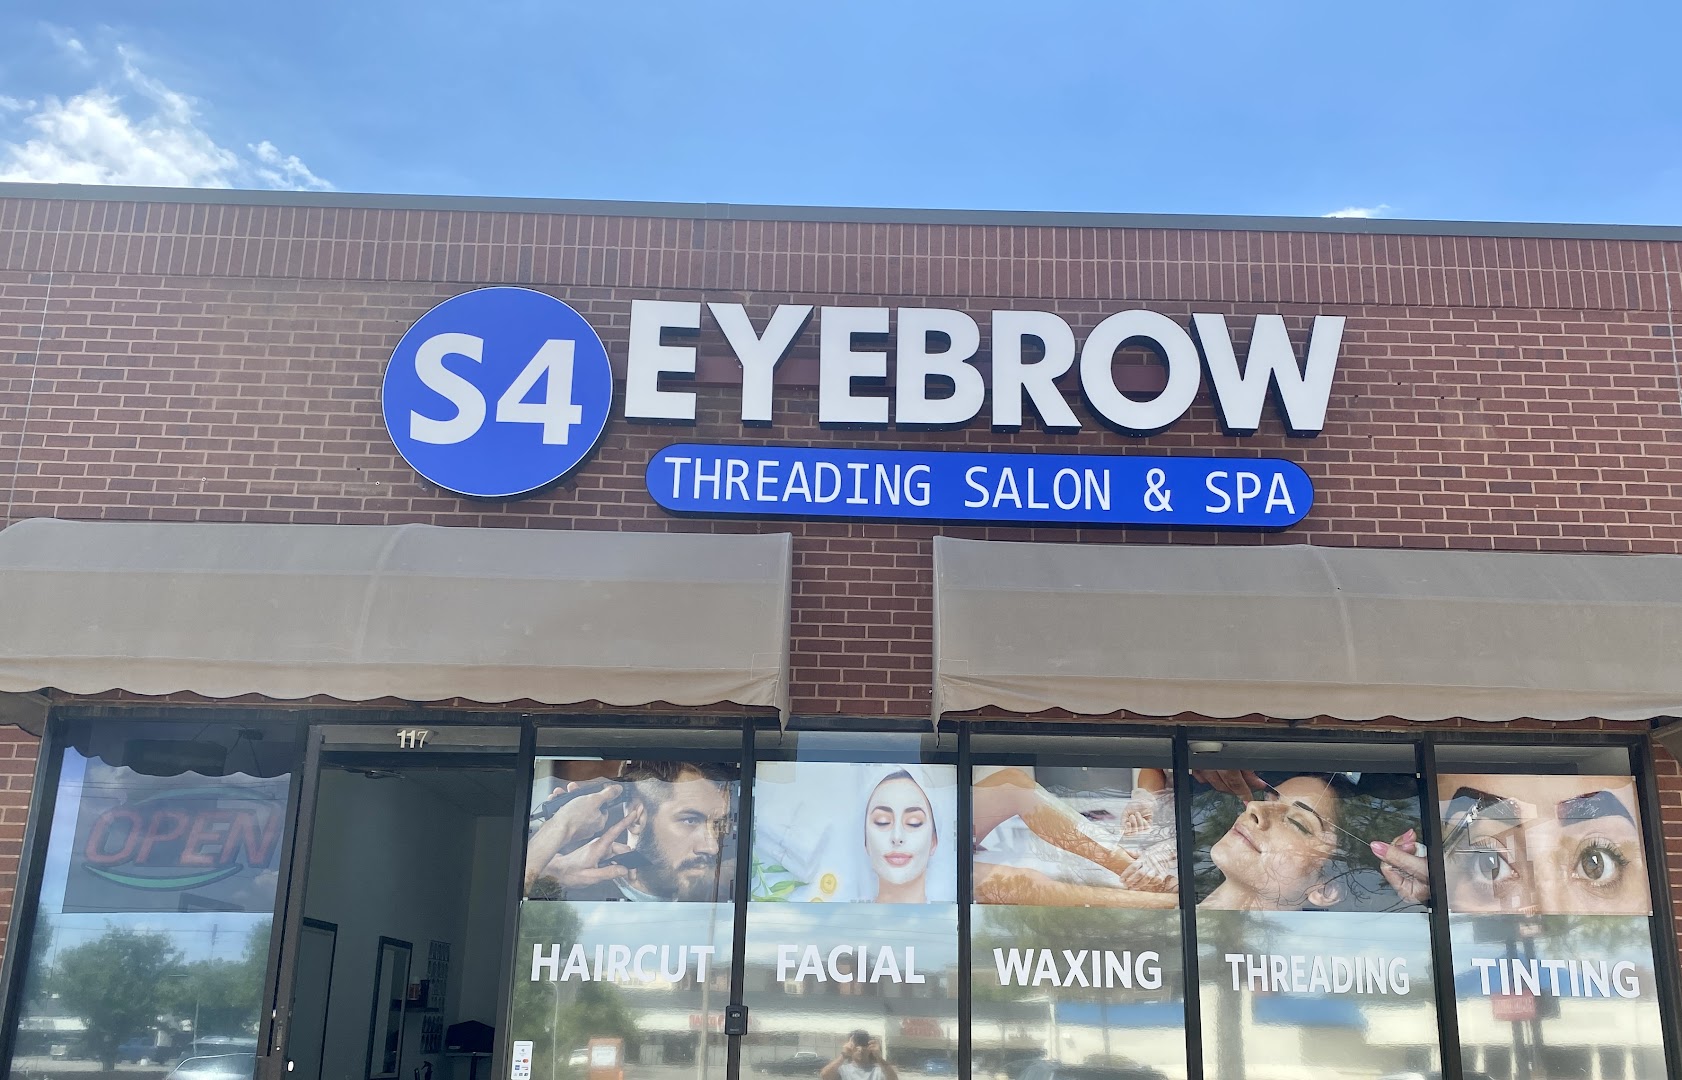 S4 Eyebrow Threading Salon & Spa